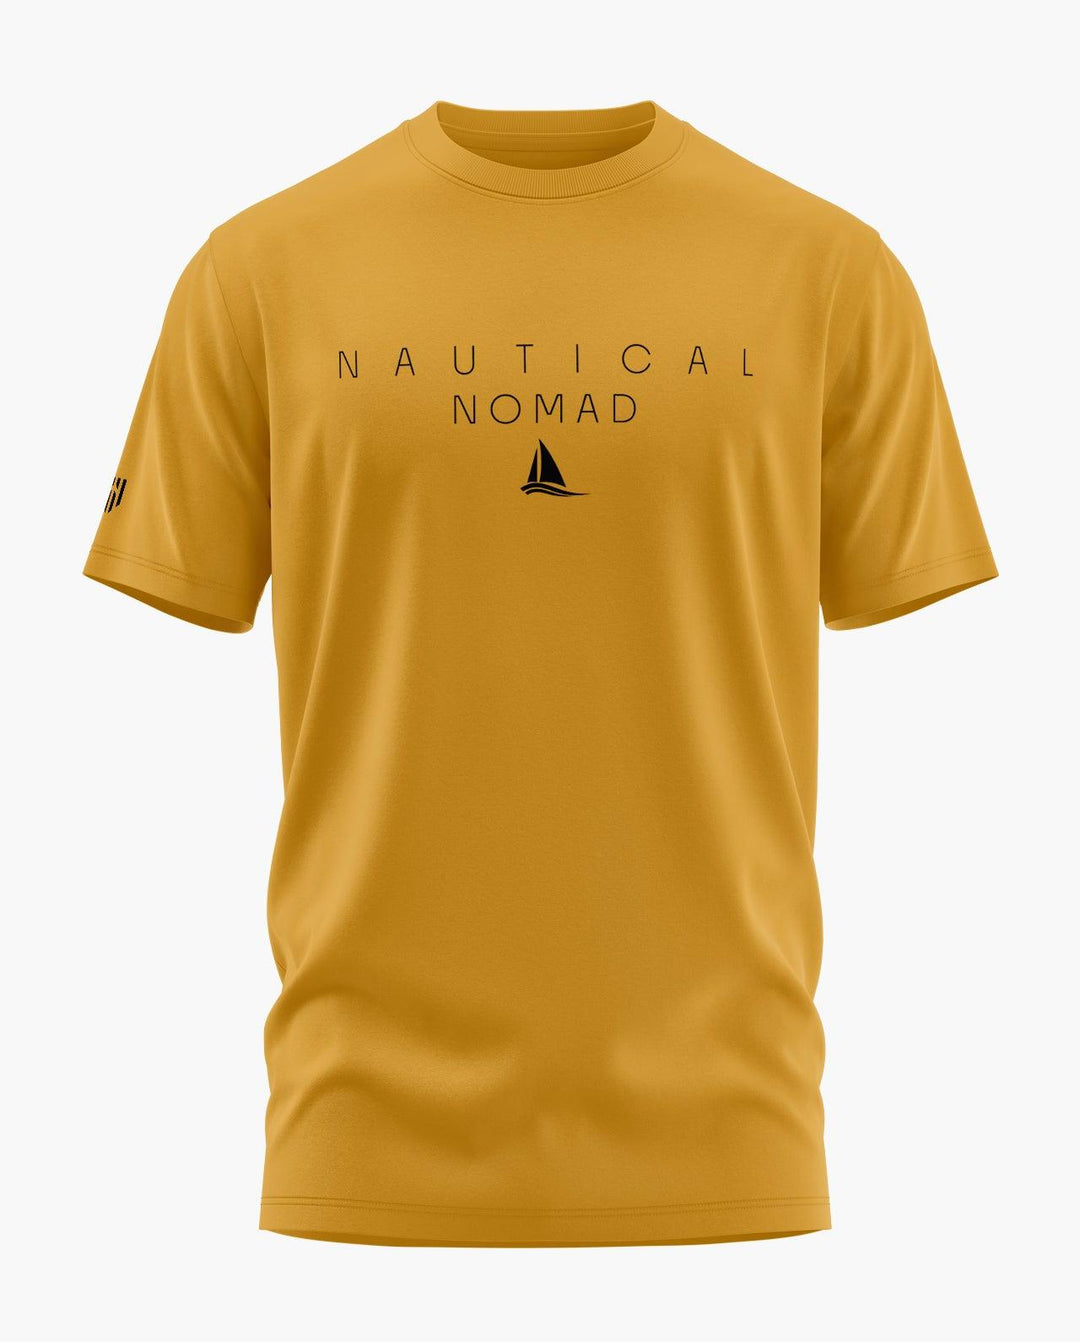 Nautical Nomad T-Shirt - Aero Armour